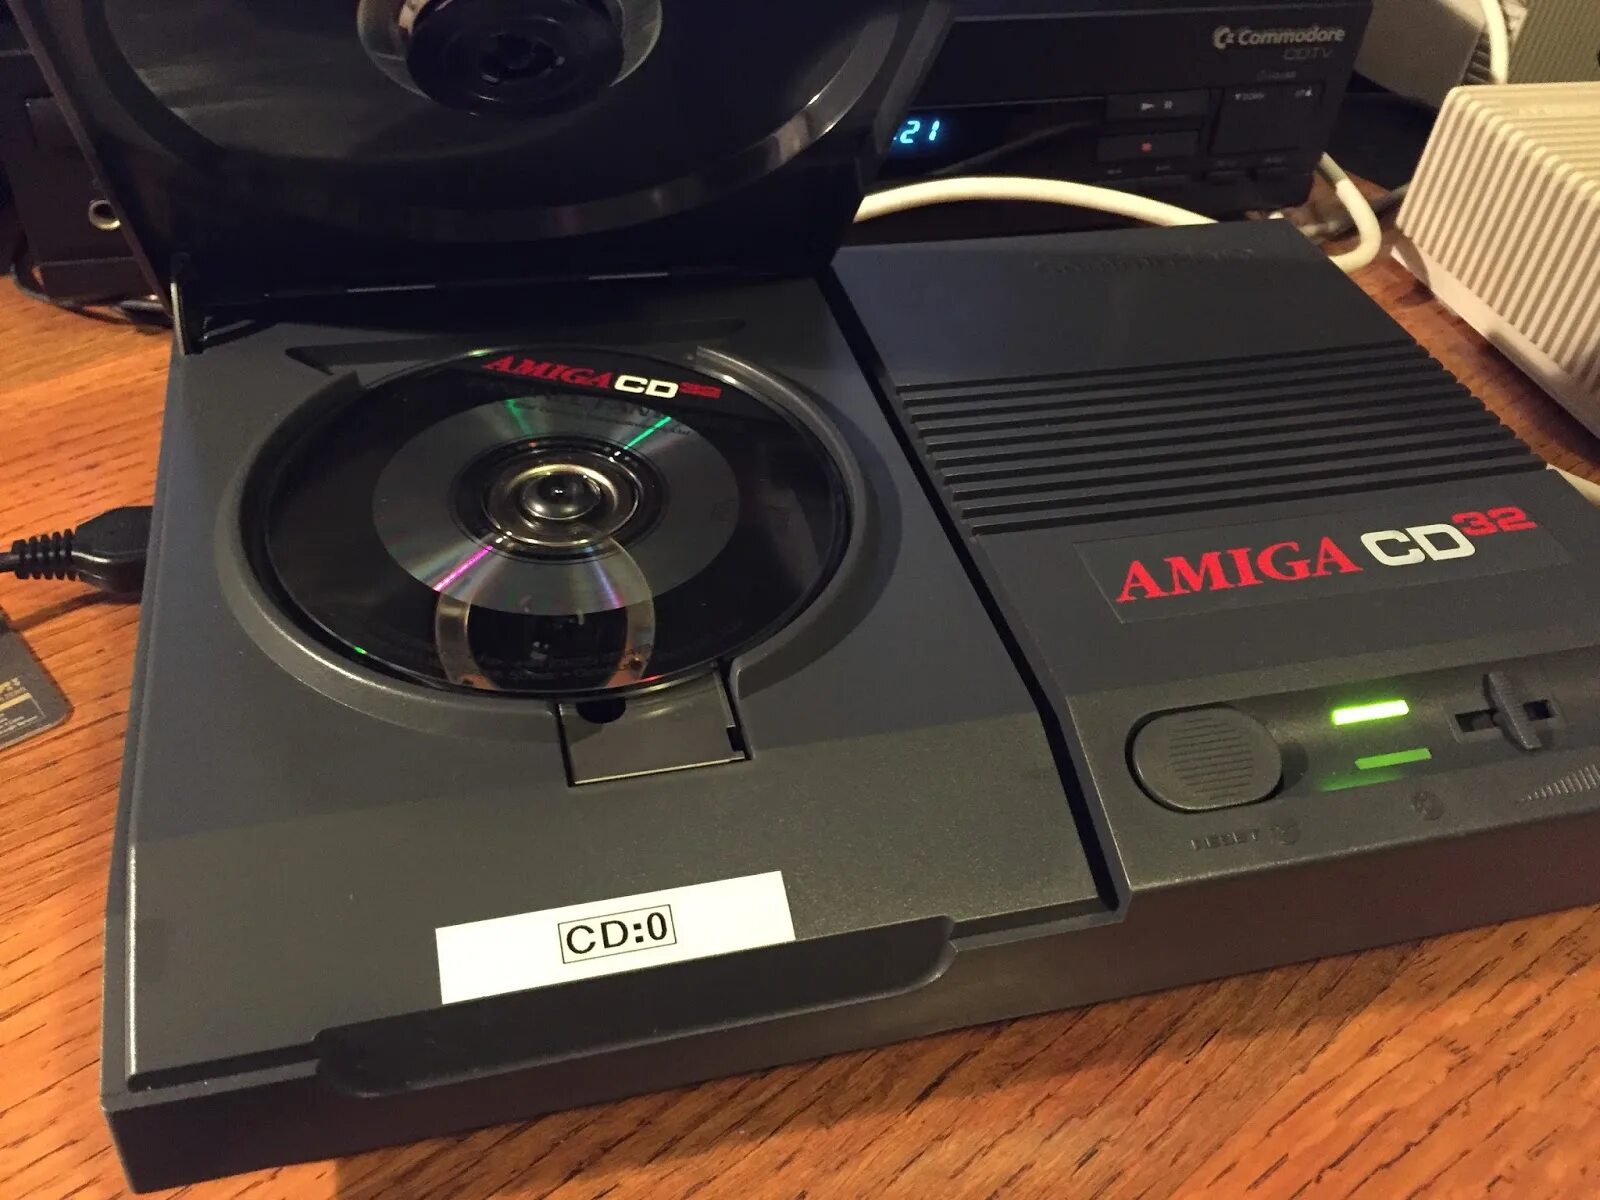 Amiga cd32. Commodore amiga cd32. Amiga CD 32 Mouse. Amiga cd32 клавиатура.